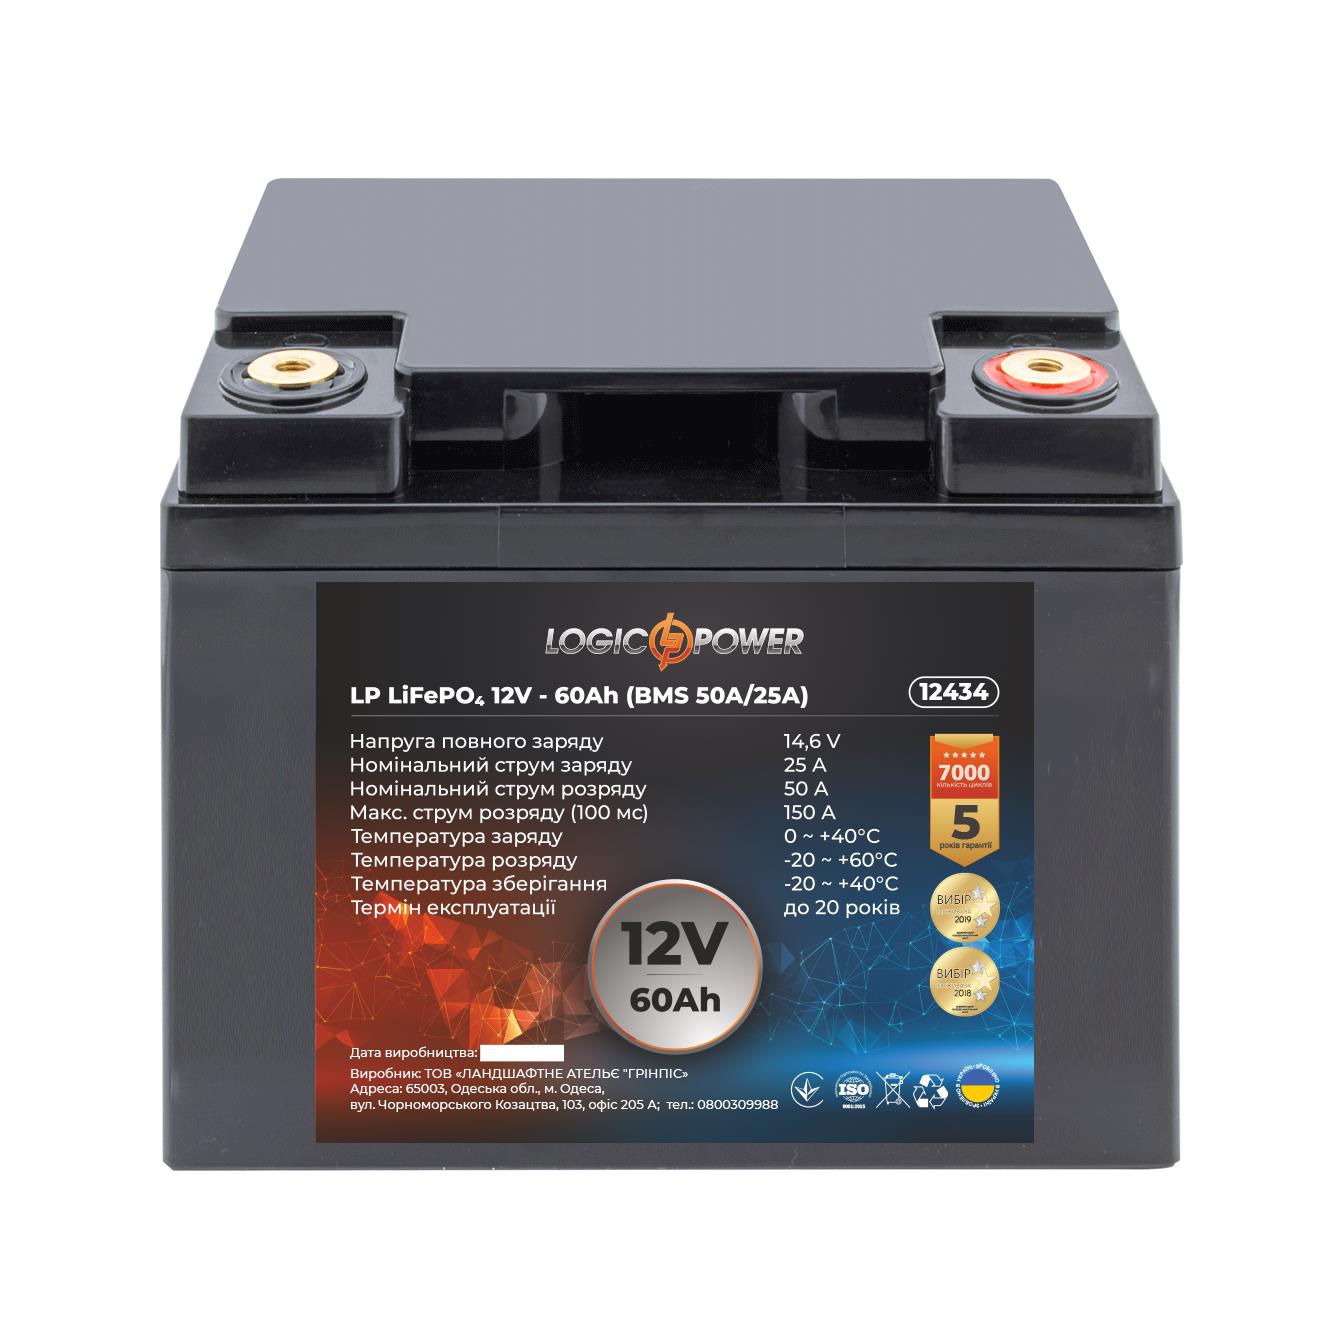 Аккумулятор литий-железо-фосфатный LogicPower LP LiFePO4 12V - 60 Ah (BMS 50A/25А) пластик (12434) в Львове